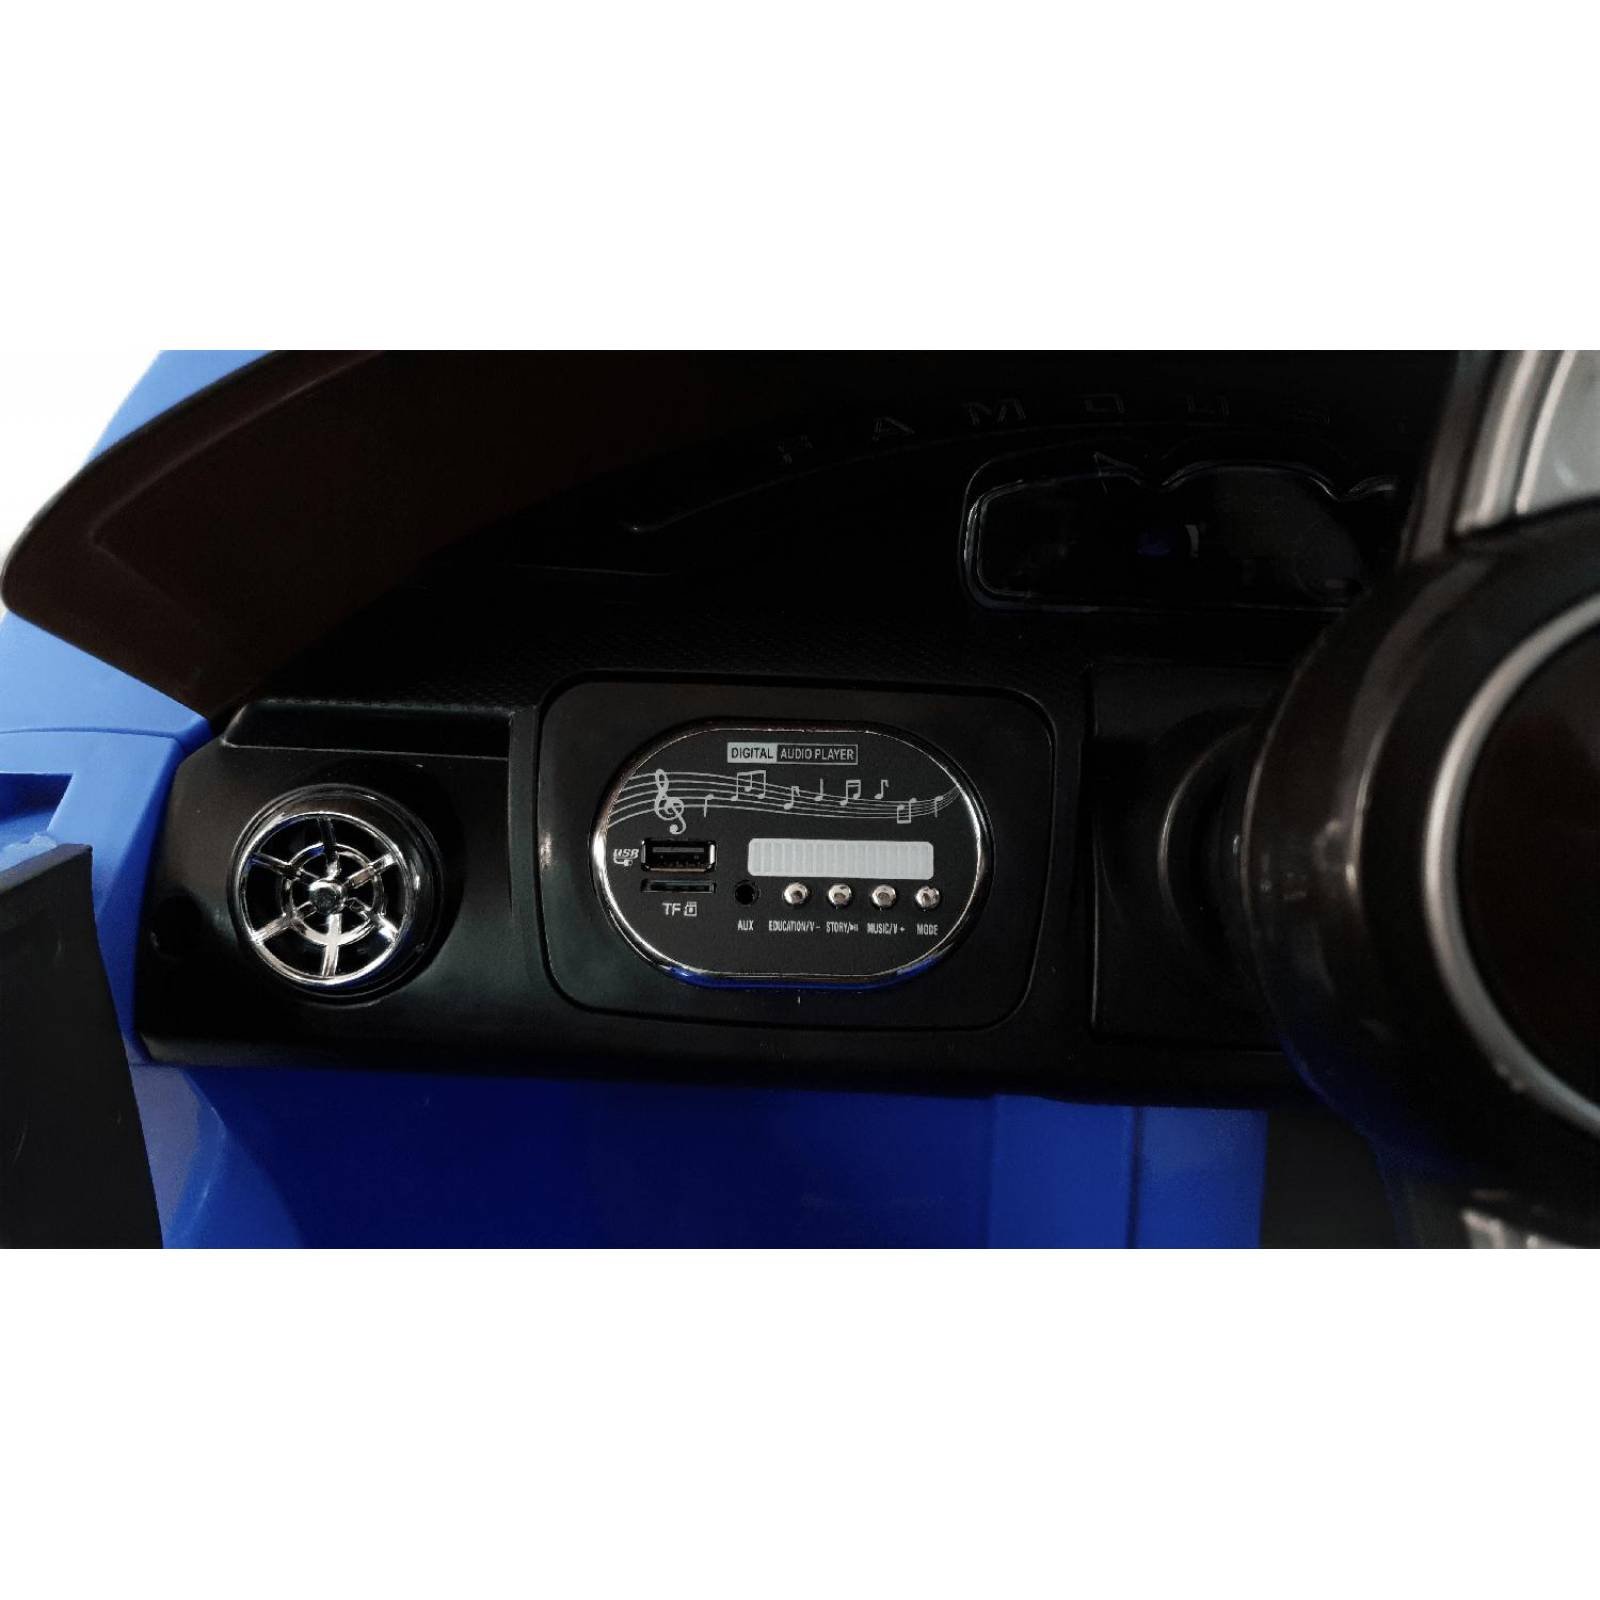 Carro Eléctrico Montable 6Km/h Control Remoto 2.4GHz,MP3,LED  - Blanco